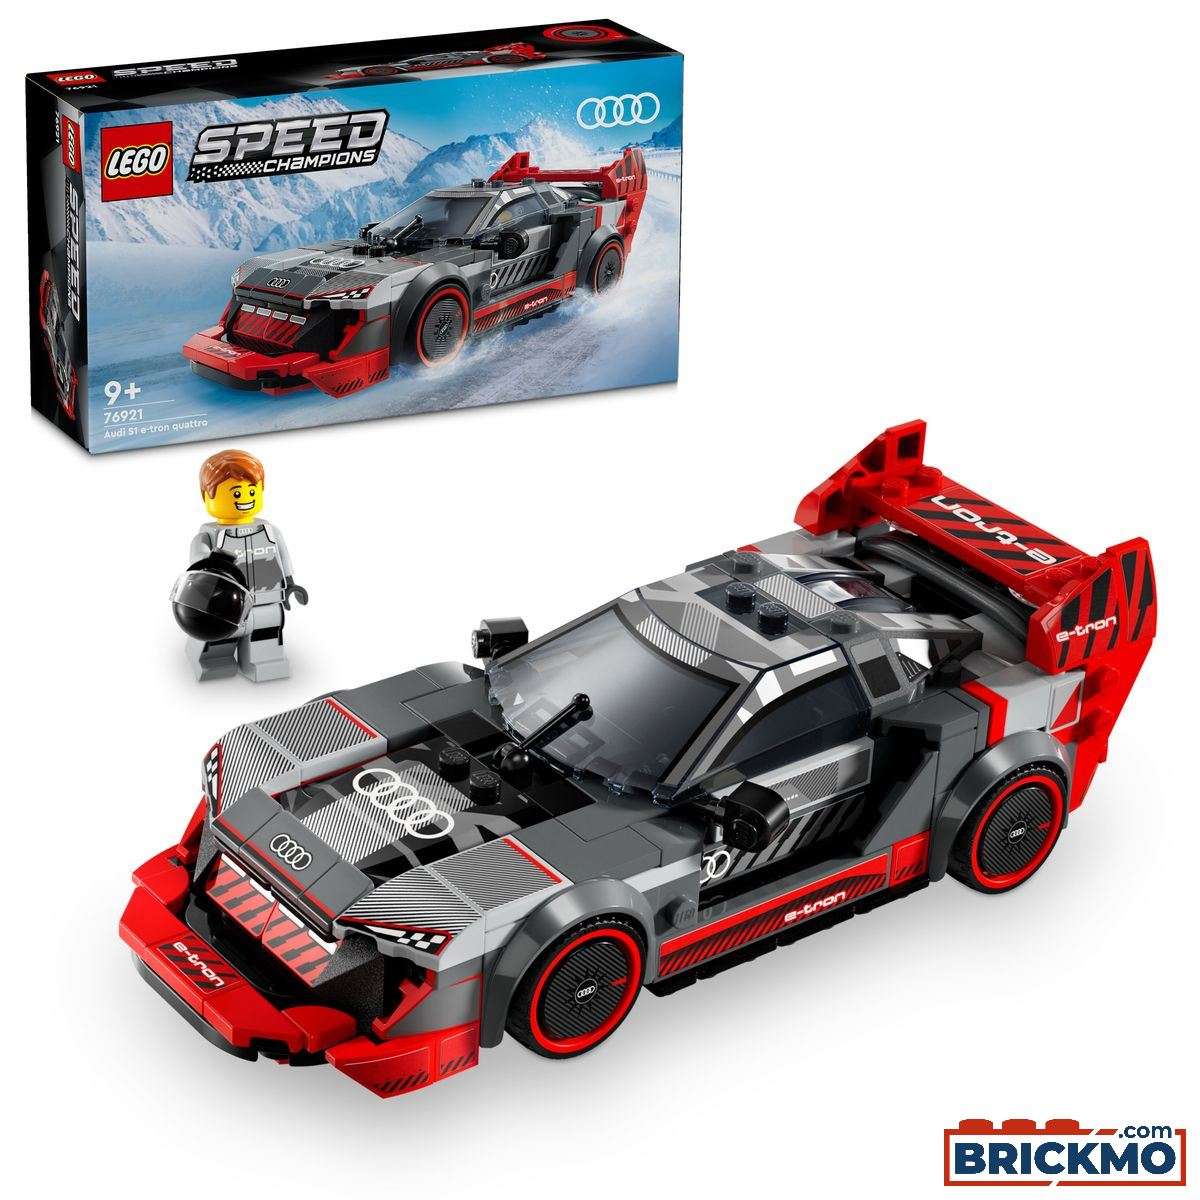 LEGO Speed Champions 76921 Pretekárske auto Audi S1 e-tron quattro 76921